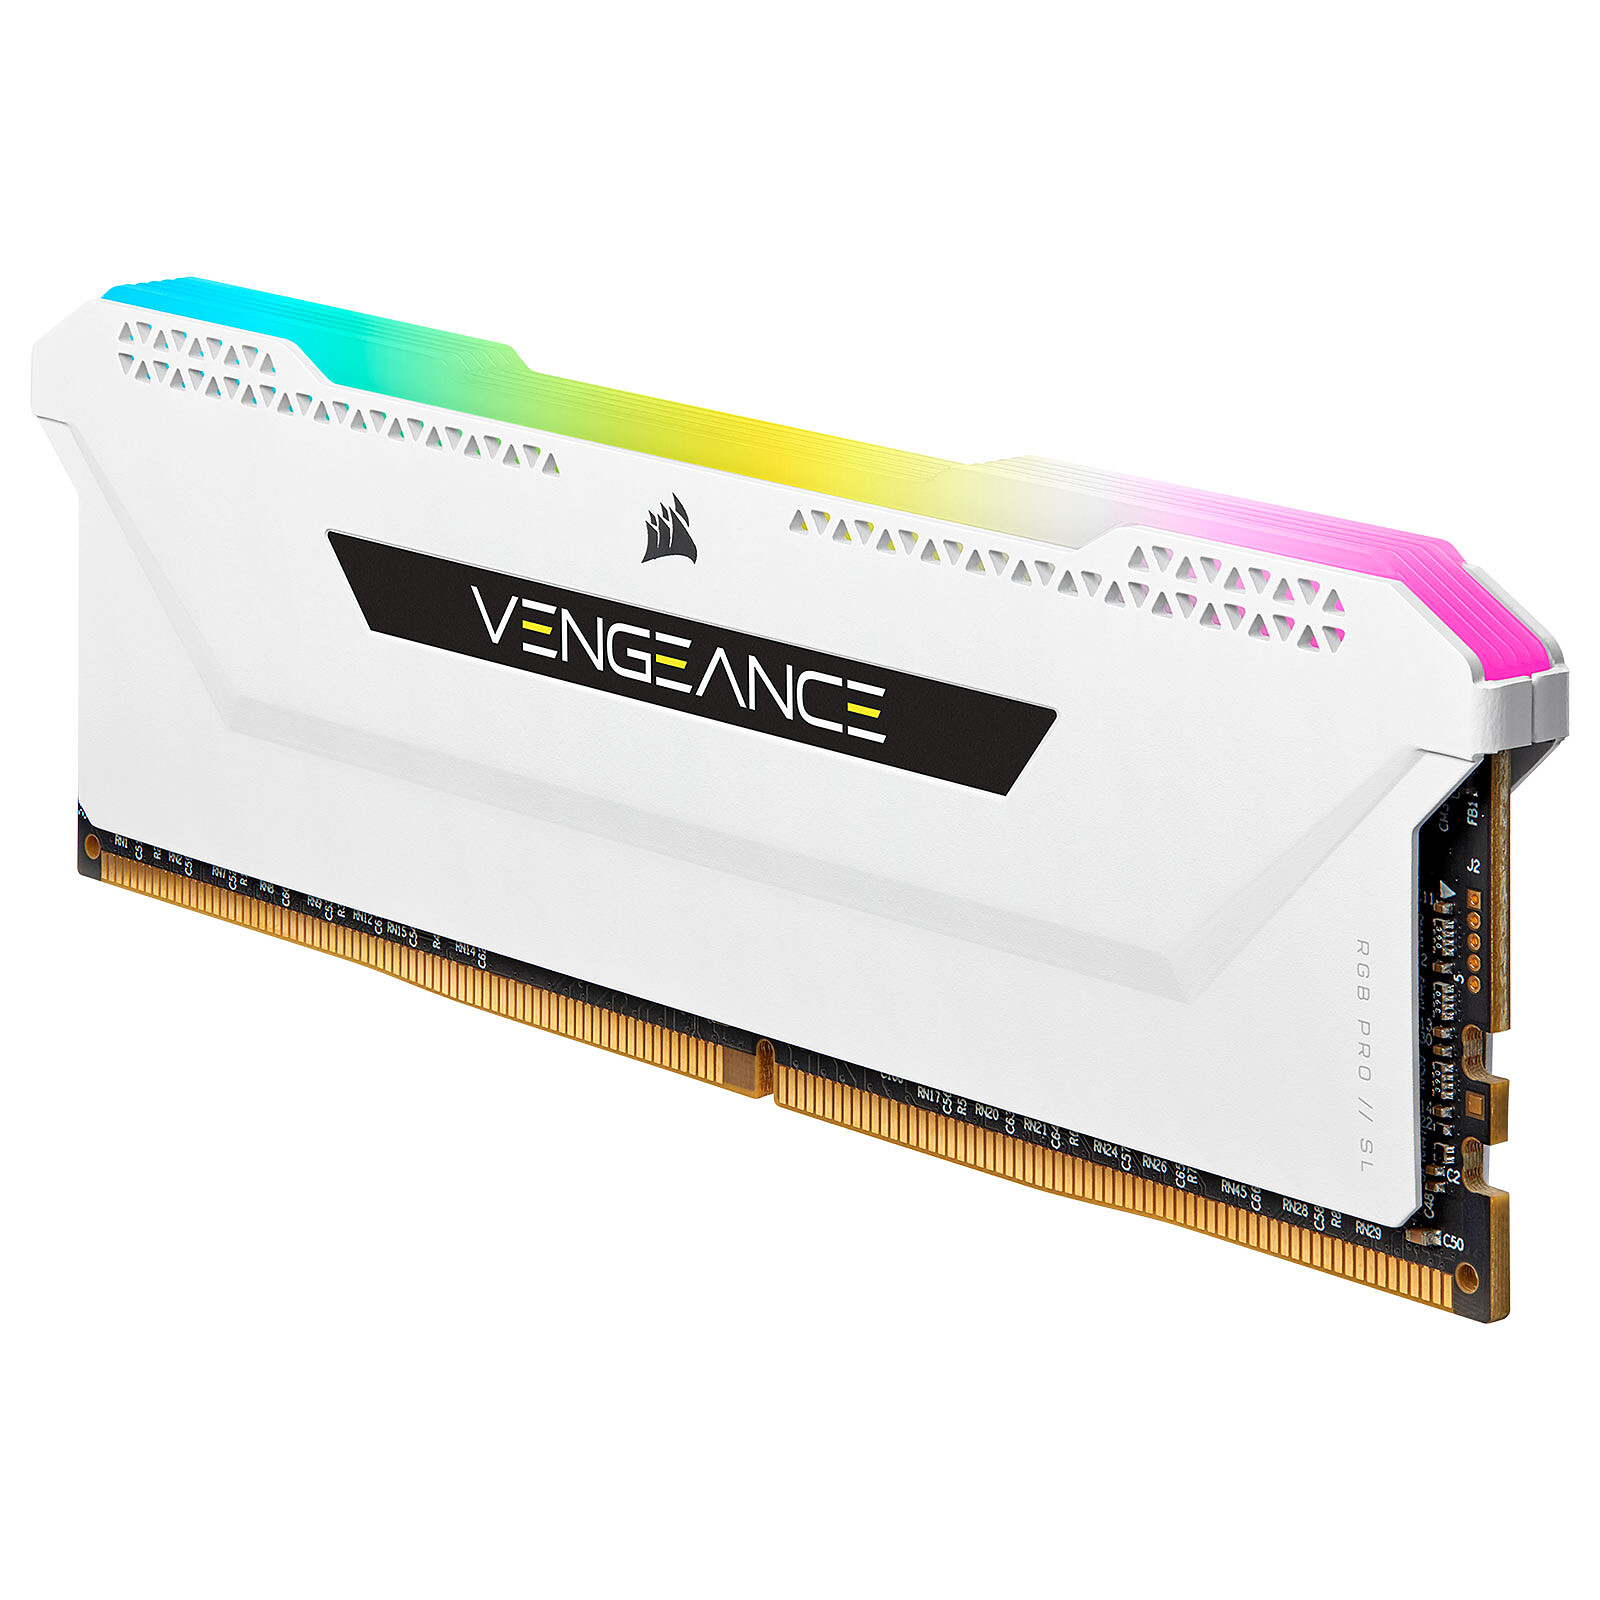 Series DDR4 - - Vengeance 3-year LDLC SL RGB (4x8GB) PC 32GB - RAM CL16 White PRO Corsair warranty 3200MHz